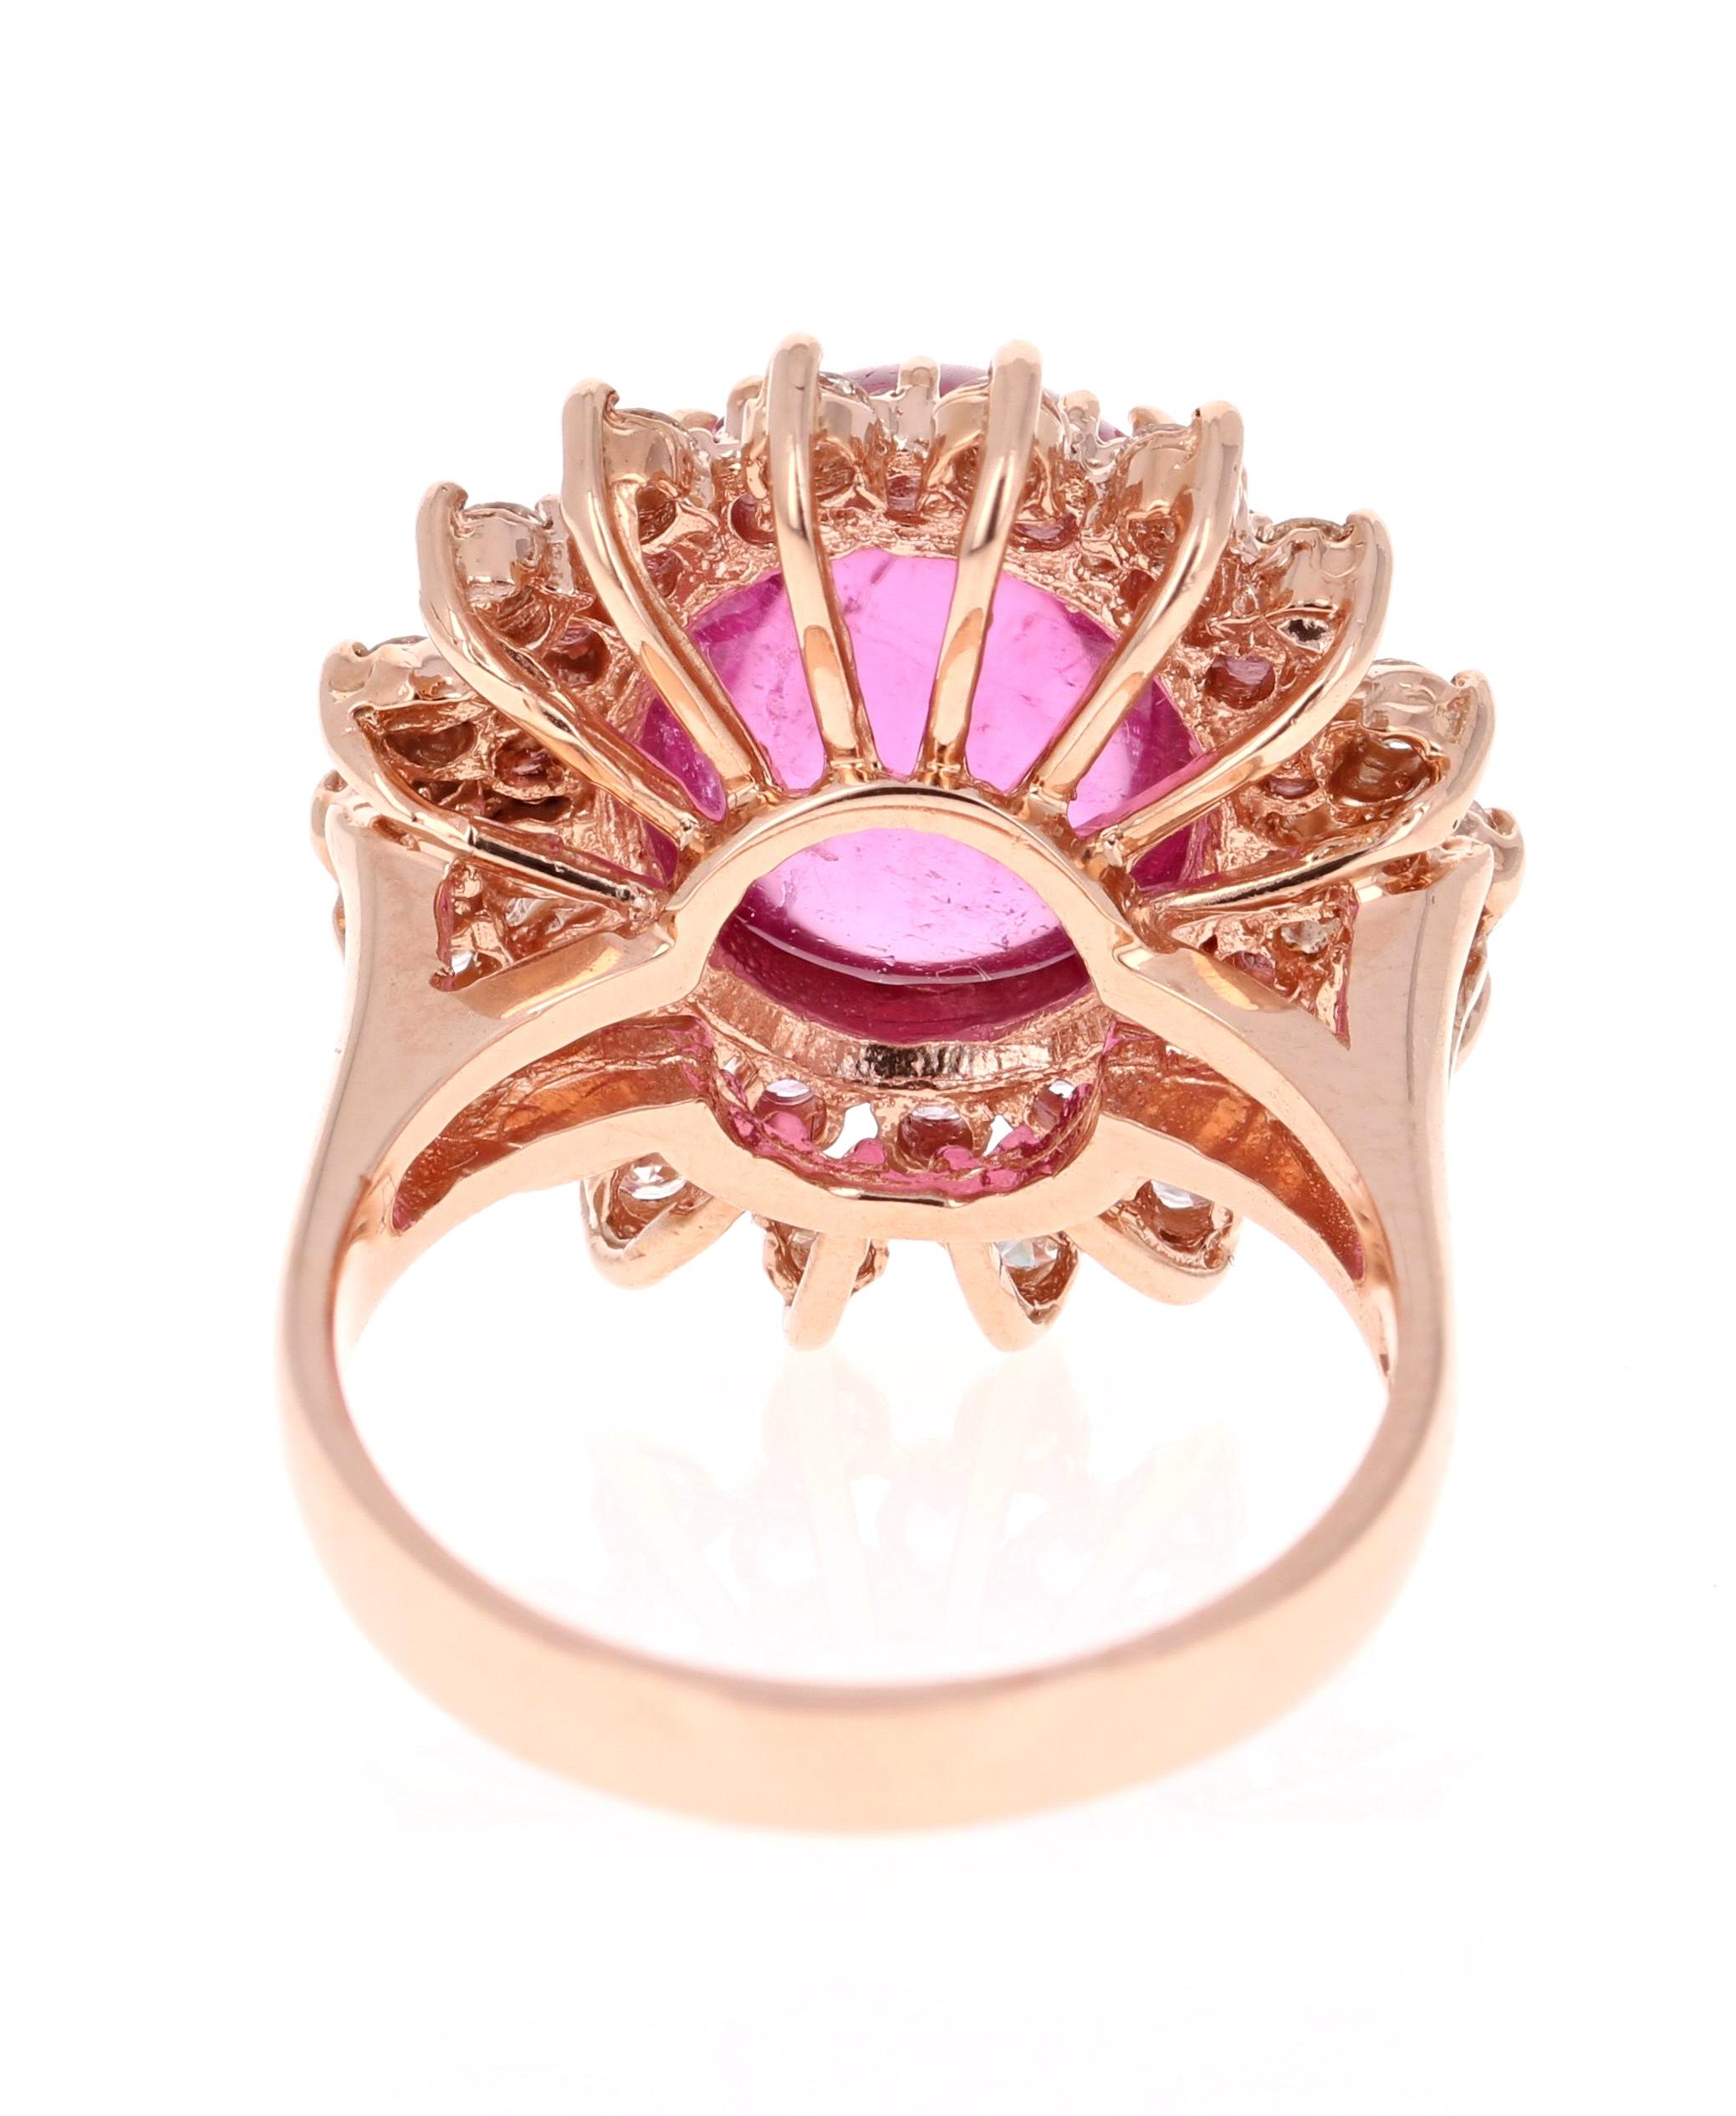 Oval Cut 7.42 Carat Tourmaline Pink Sapphire Diamond 14 Karat Rose Gold Ring